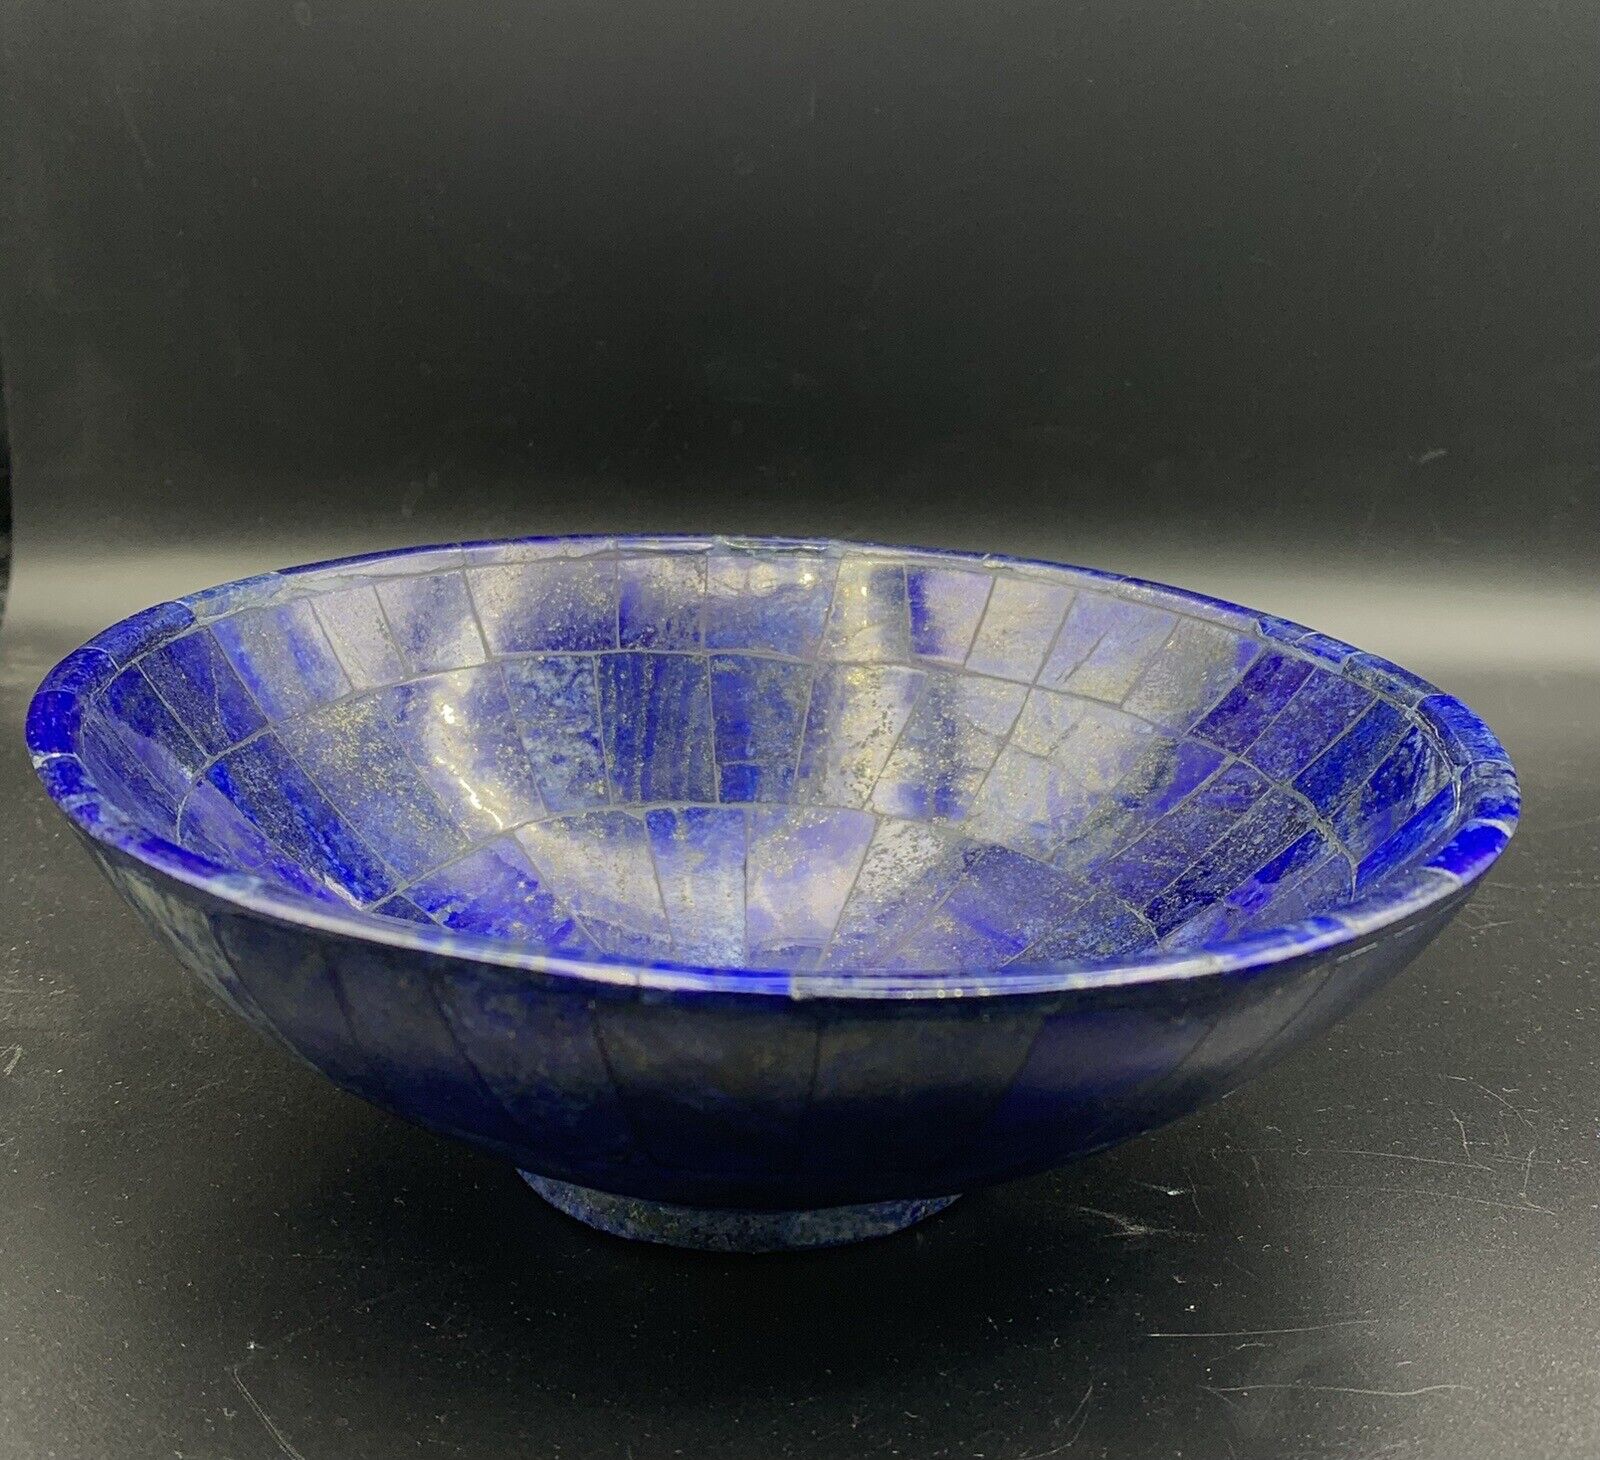 450 gm of Beautiful handmade Royal blue Lapis lazuli bowl